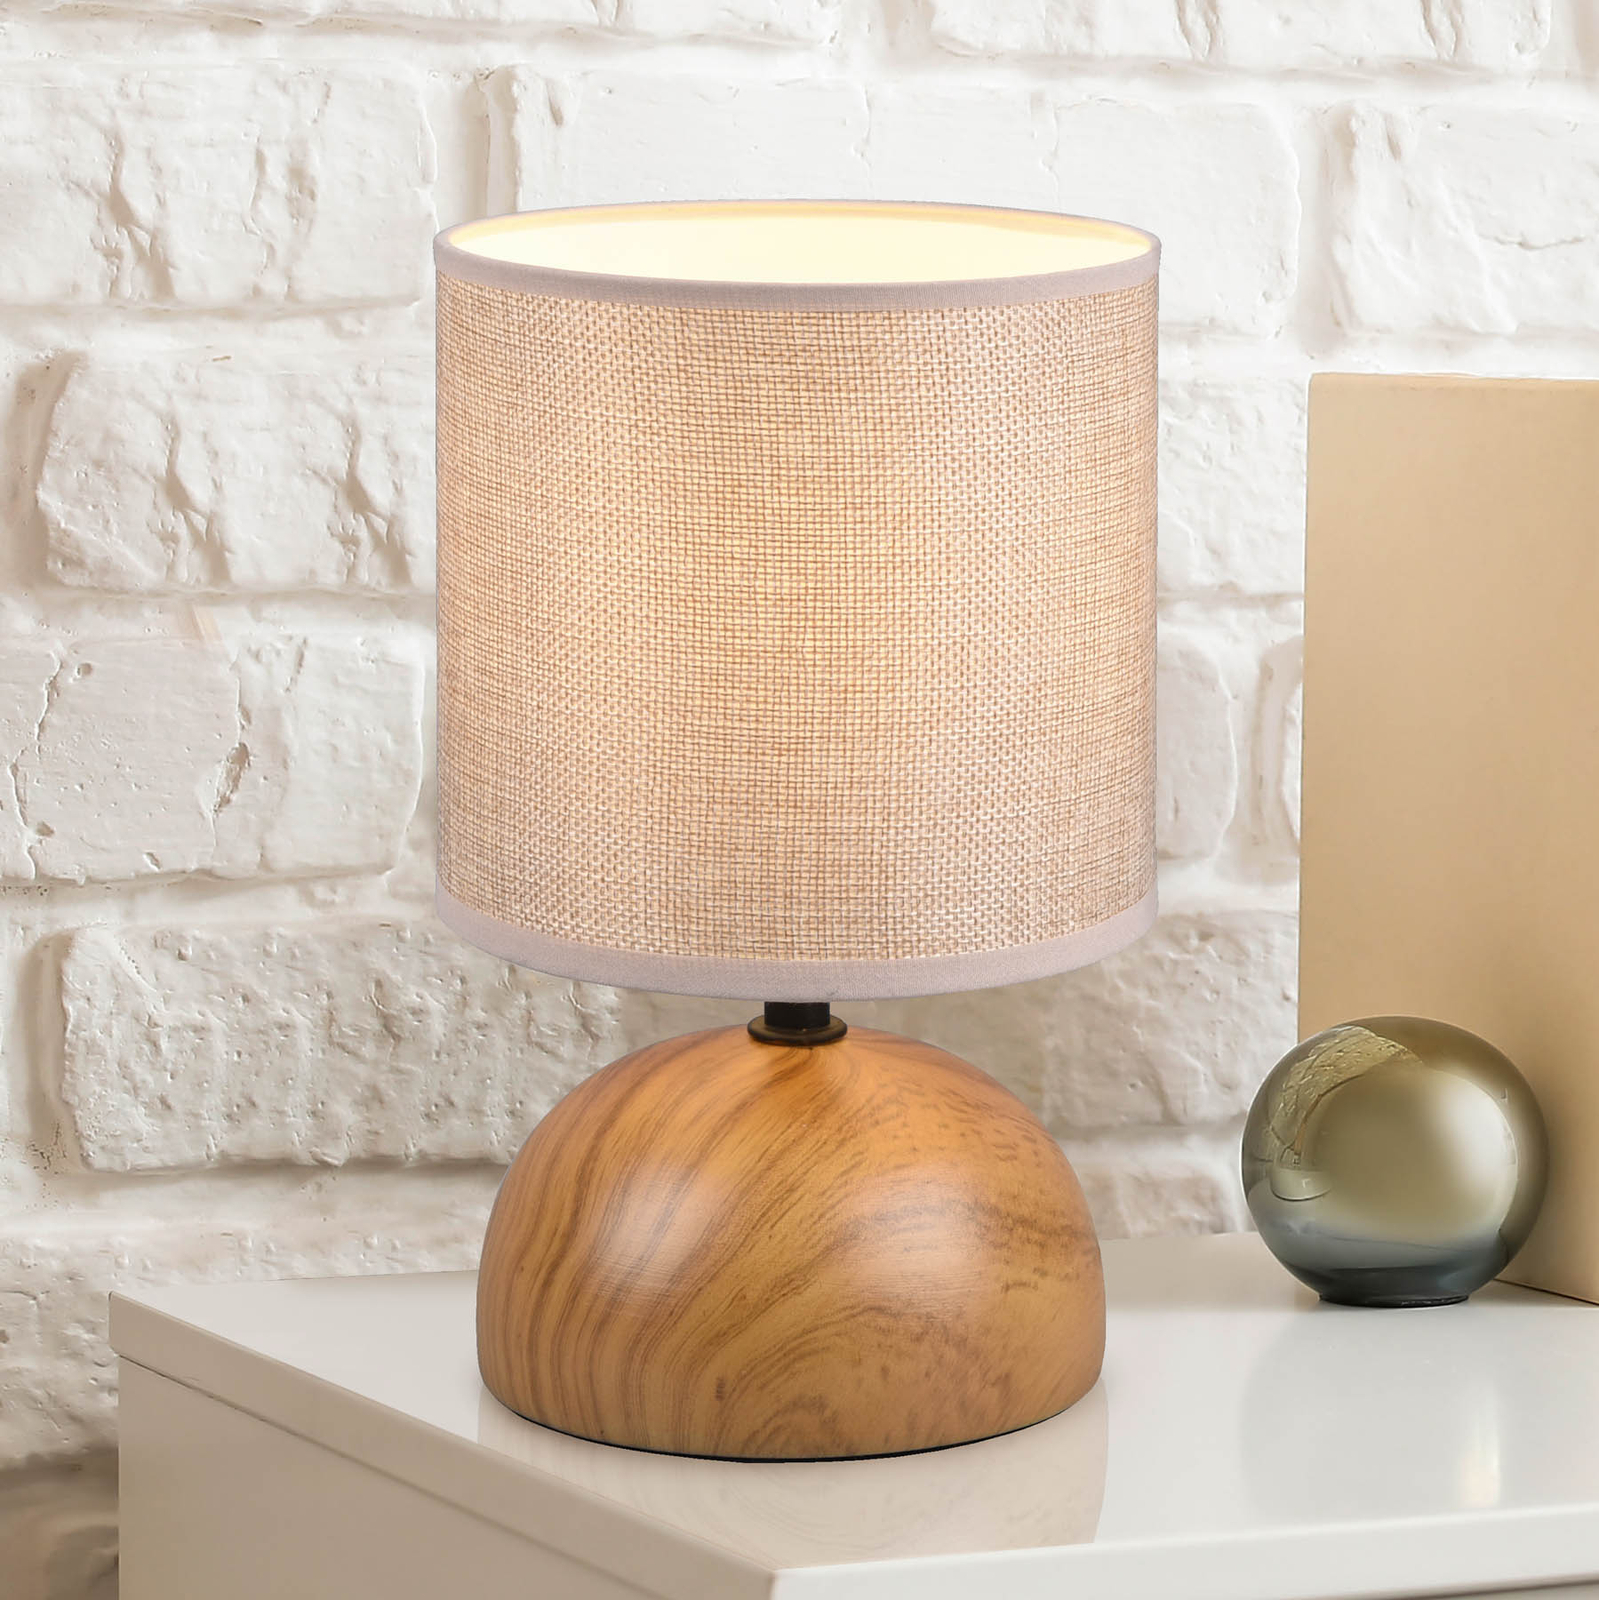 Luci table lamp, beige/wood look